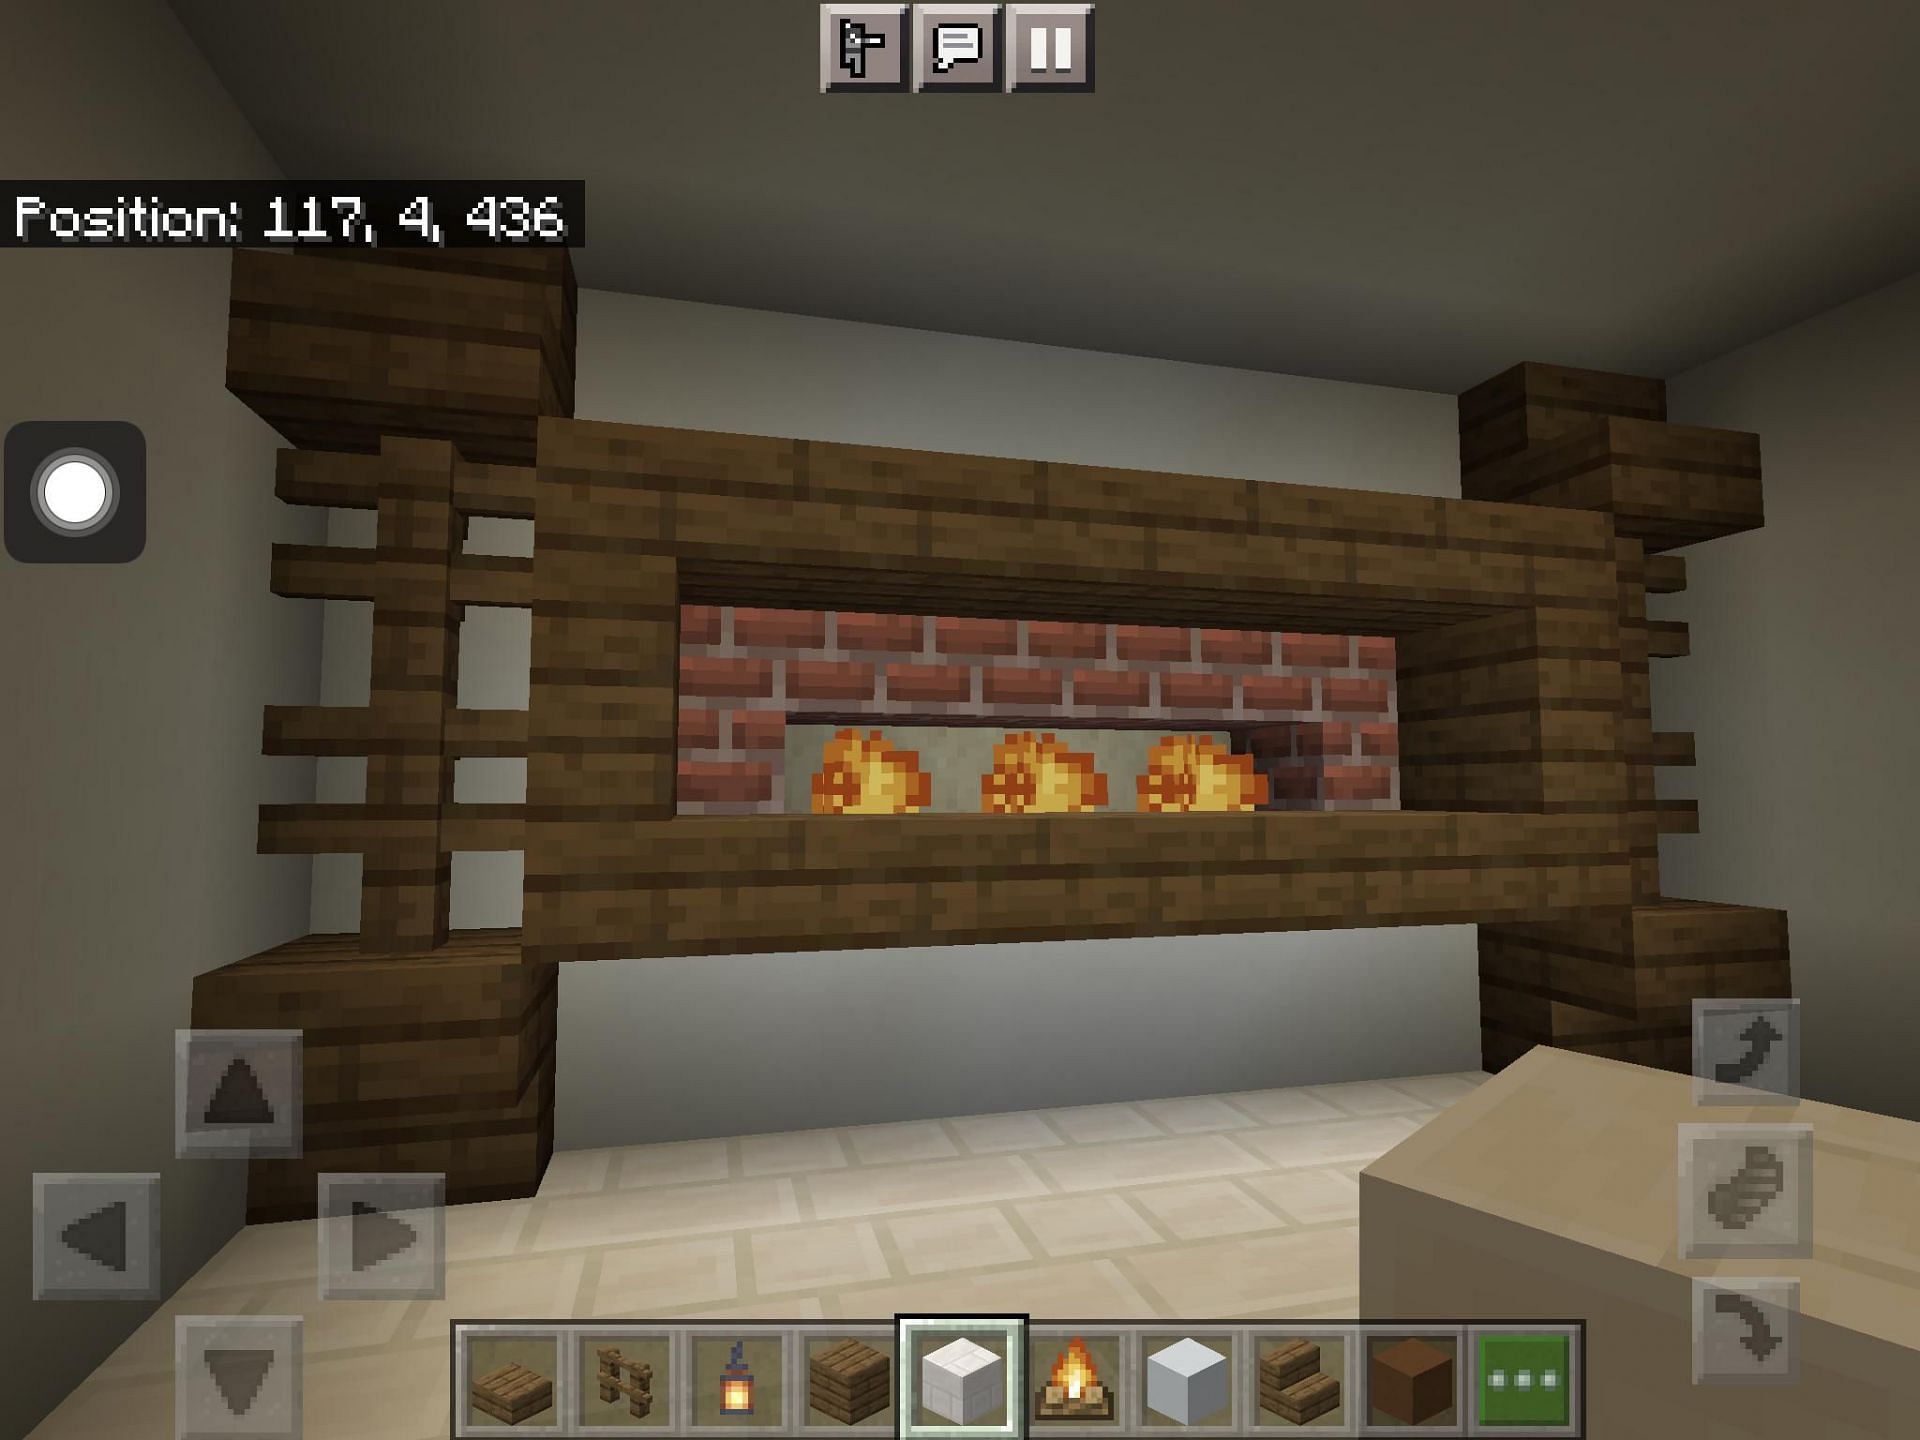 minecraft fireplace